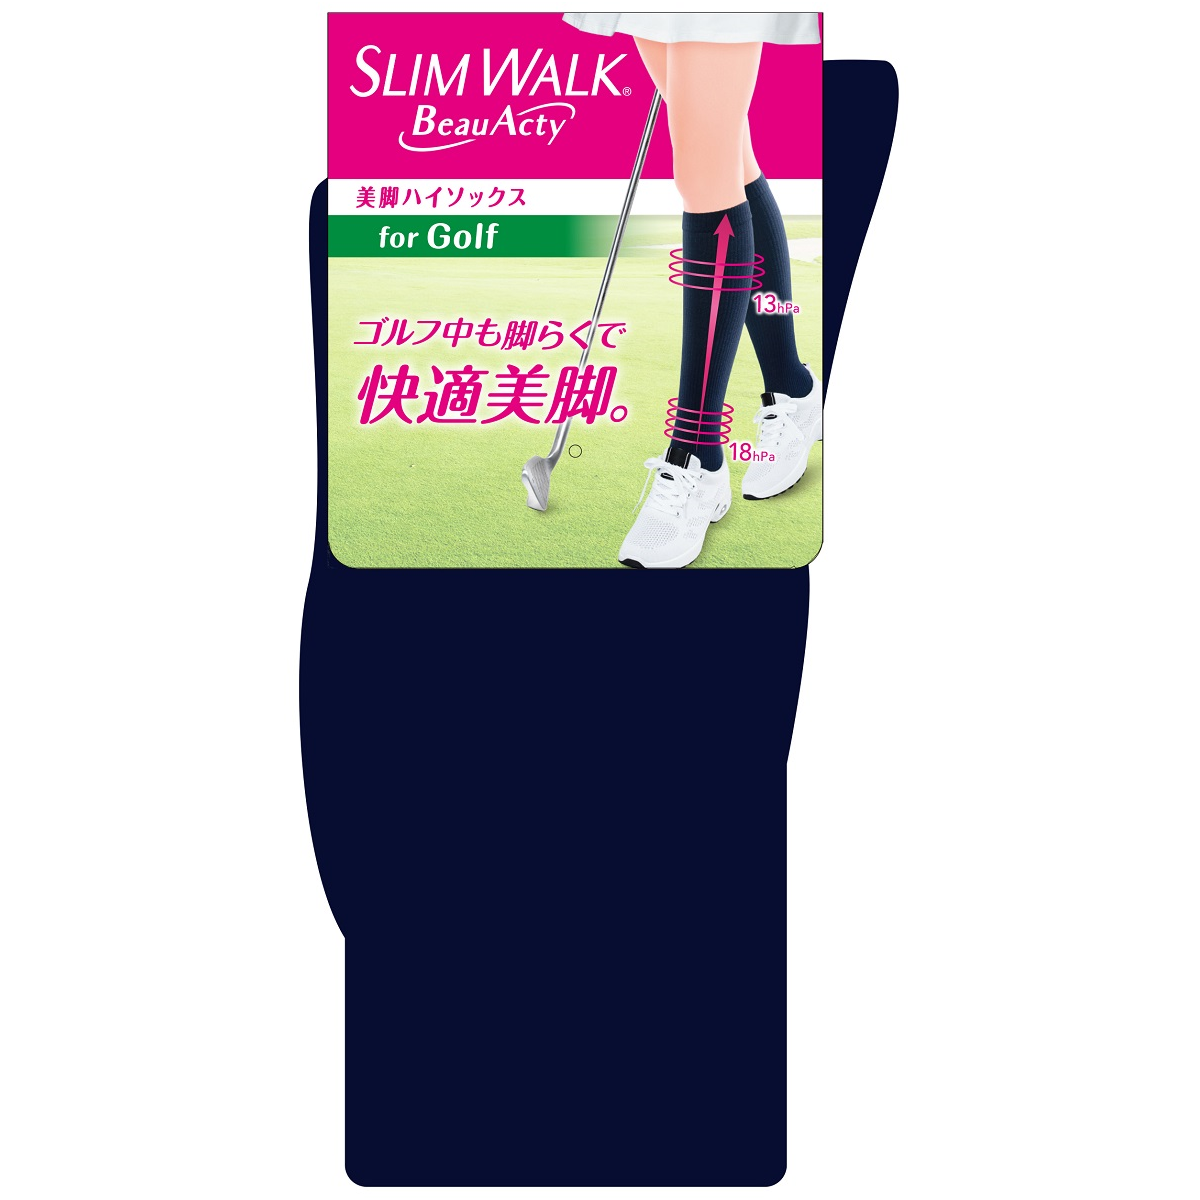 SLIMWALK BeauActy Compression Socks for Golf Navy 23-25 cm/ถุงเท้ากระชับเรียวขา 1 คู่ (สีน้ำเงิน)